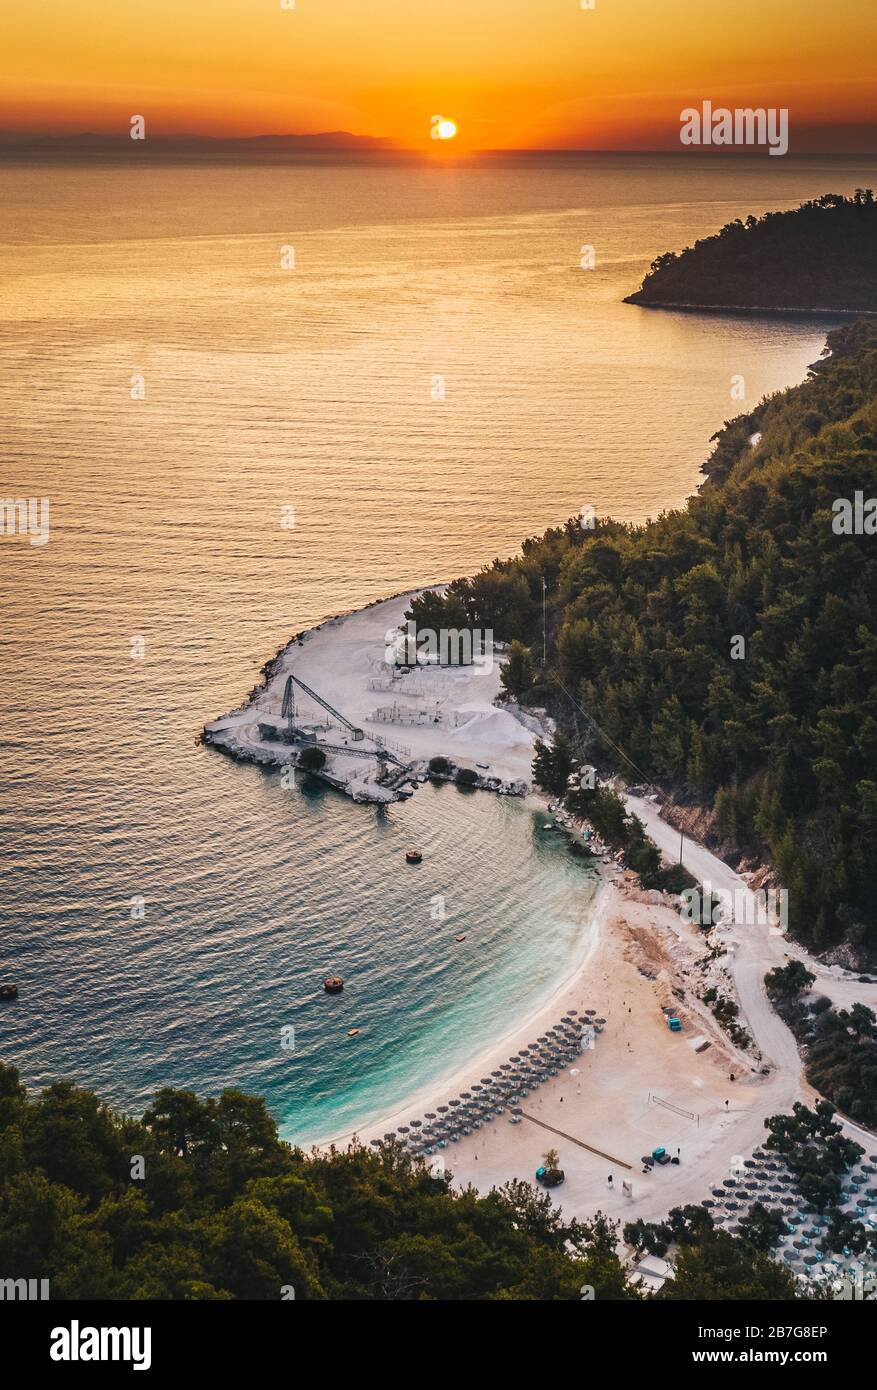 Grecia isla paradisíaca Thassos al amanecer cerca de Marble Beach Foto de stock